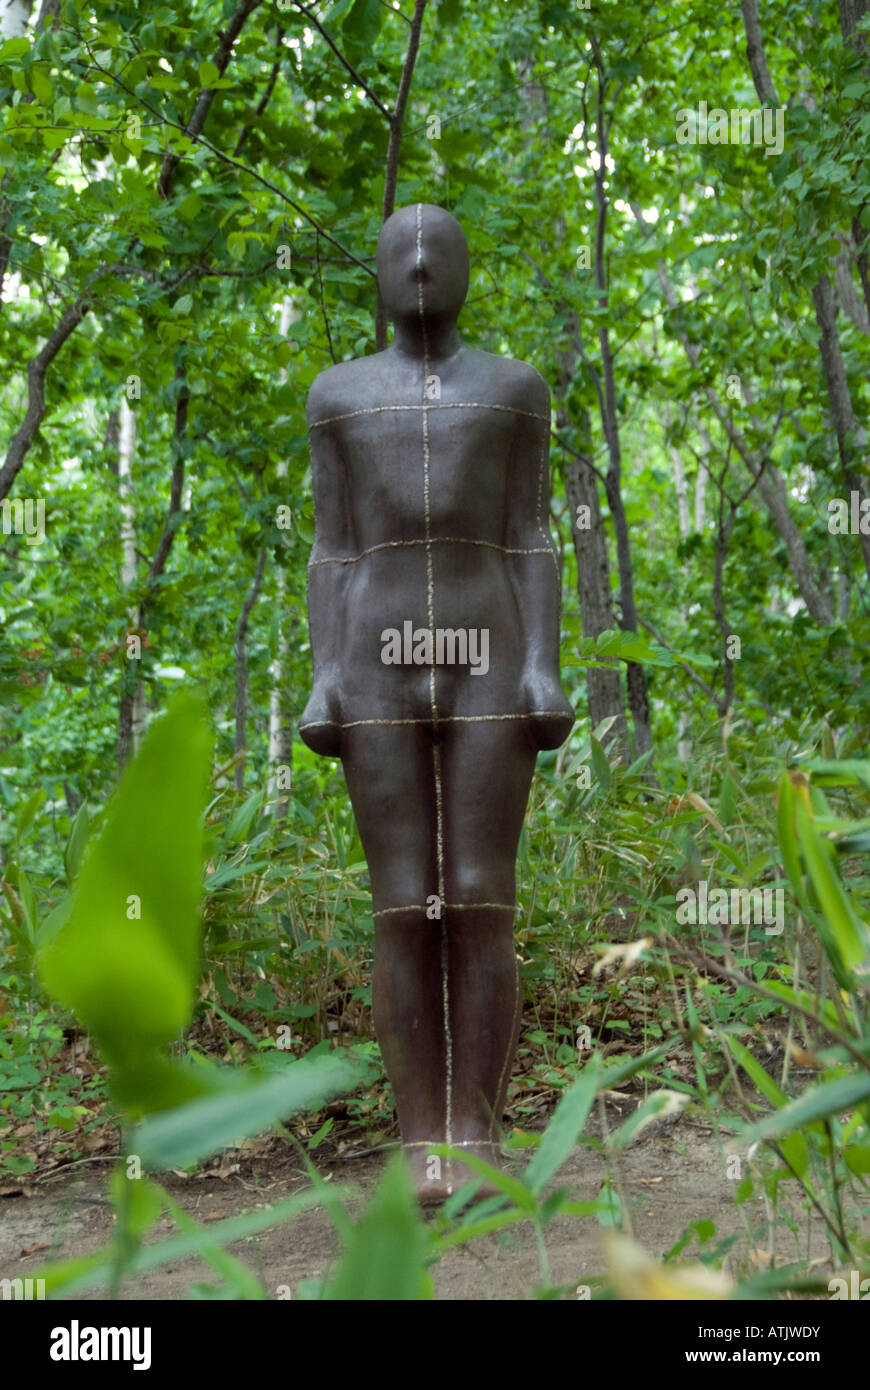 Sculpture made from iron named Shaft II by Antony Gormley at Sapporo Art Park in Hokkaido Japan Stock Photo